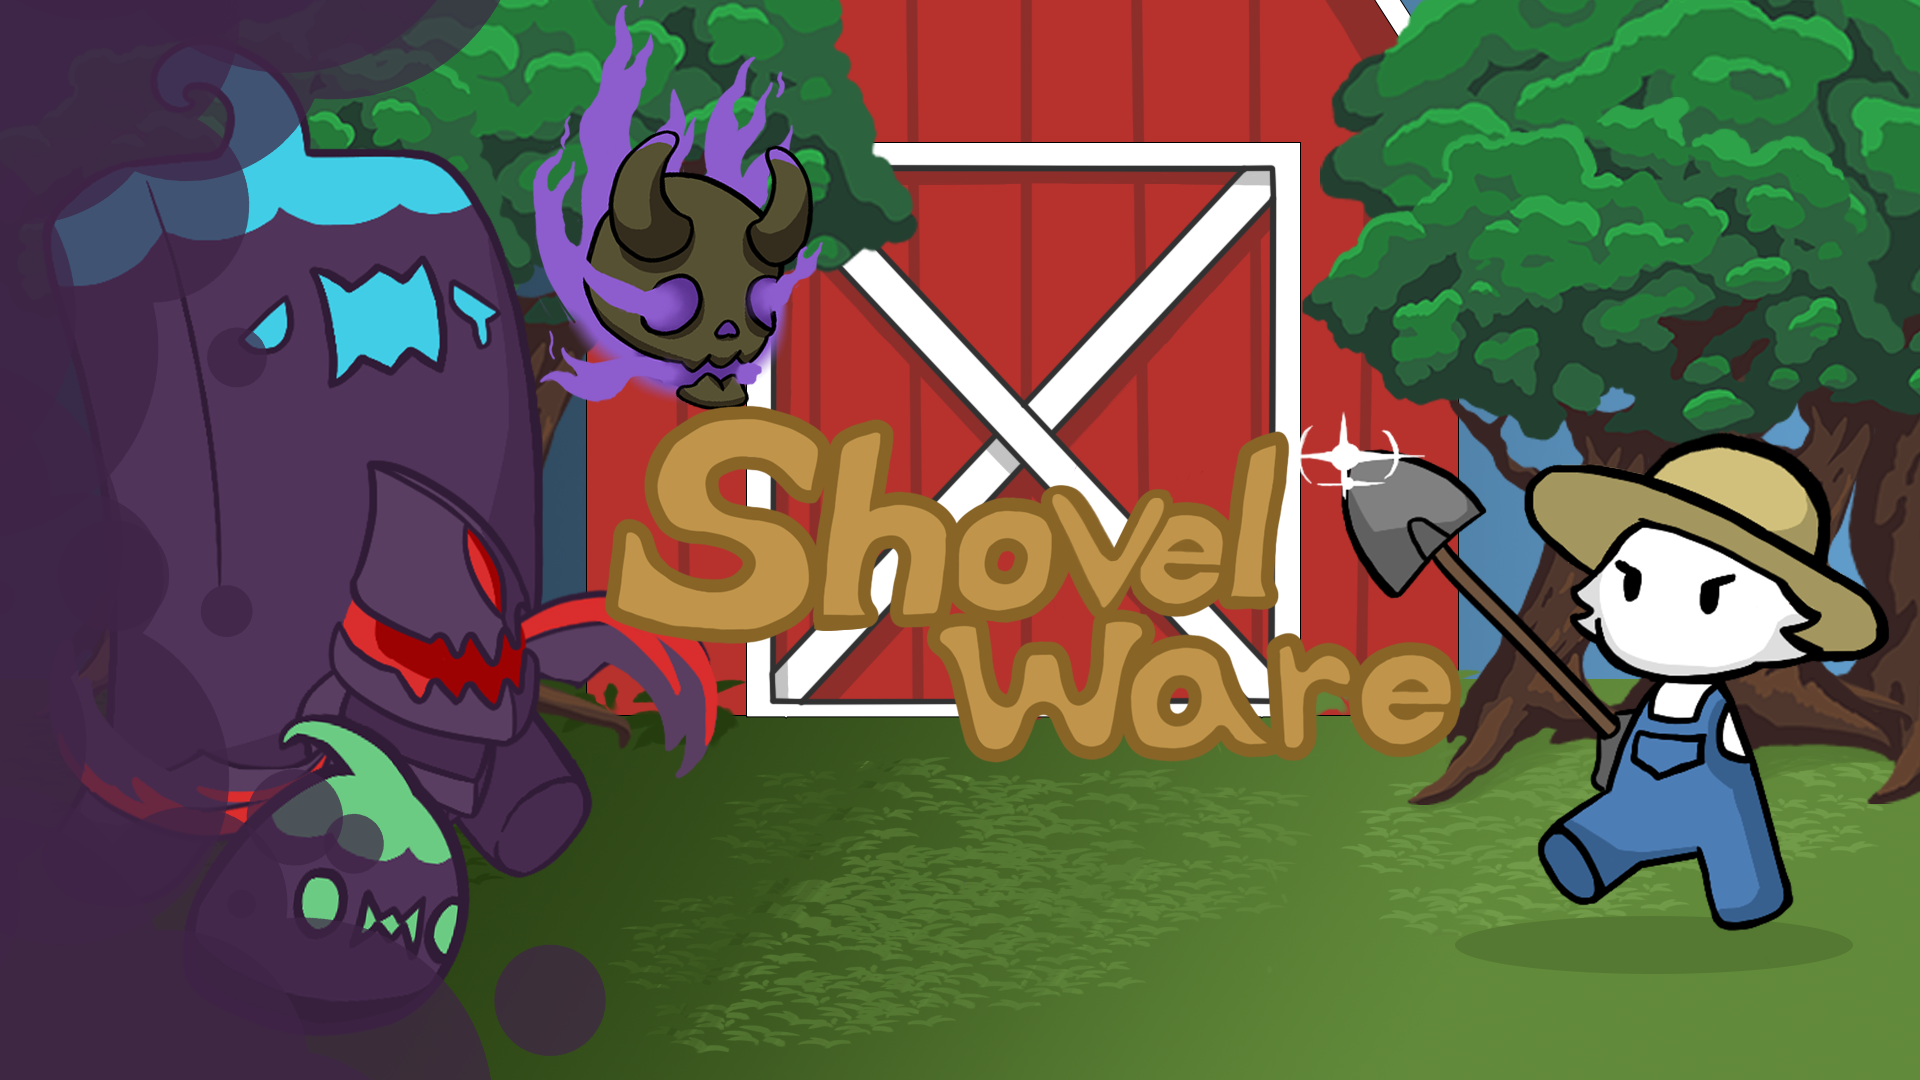 Shovelware